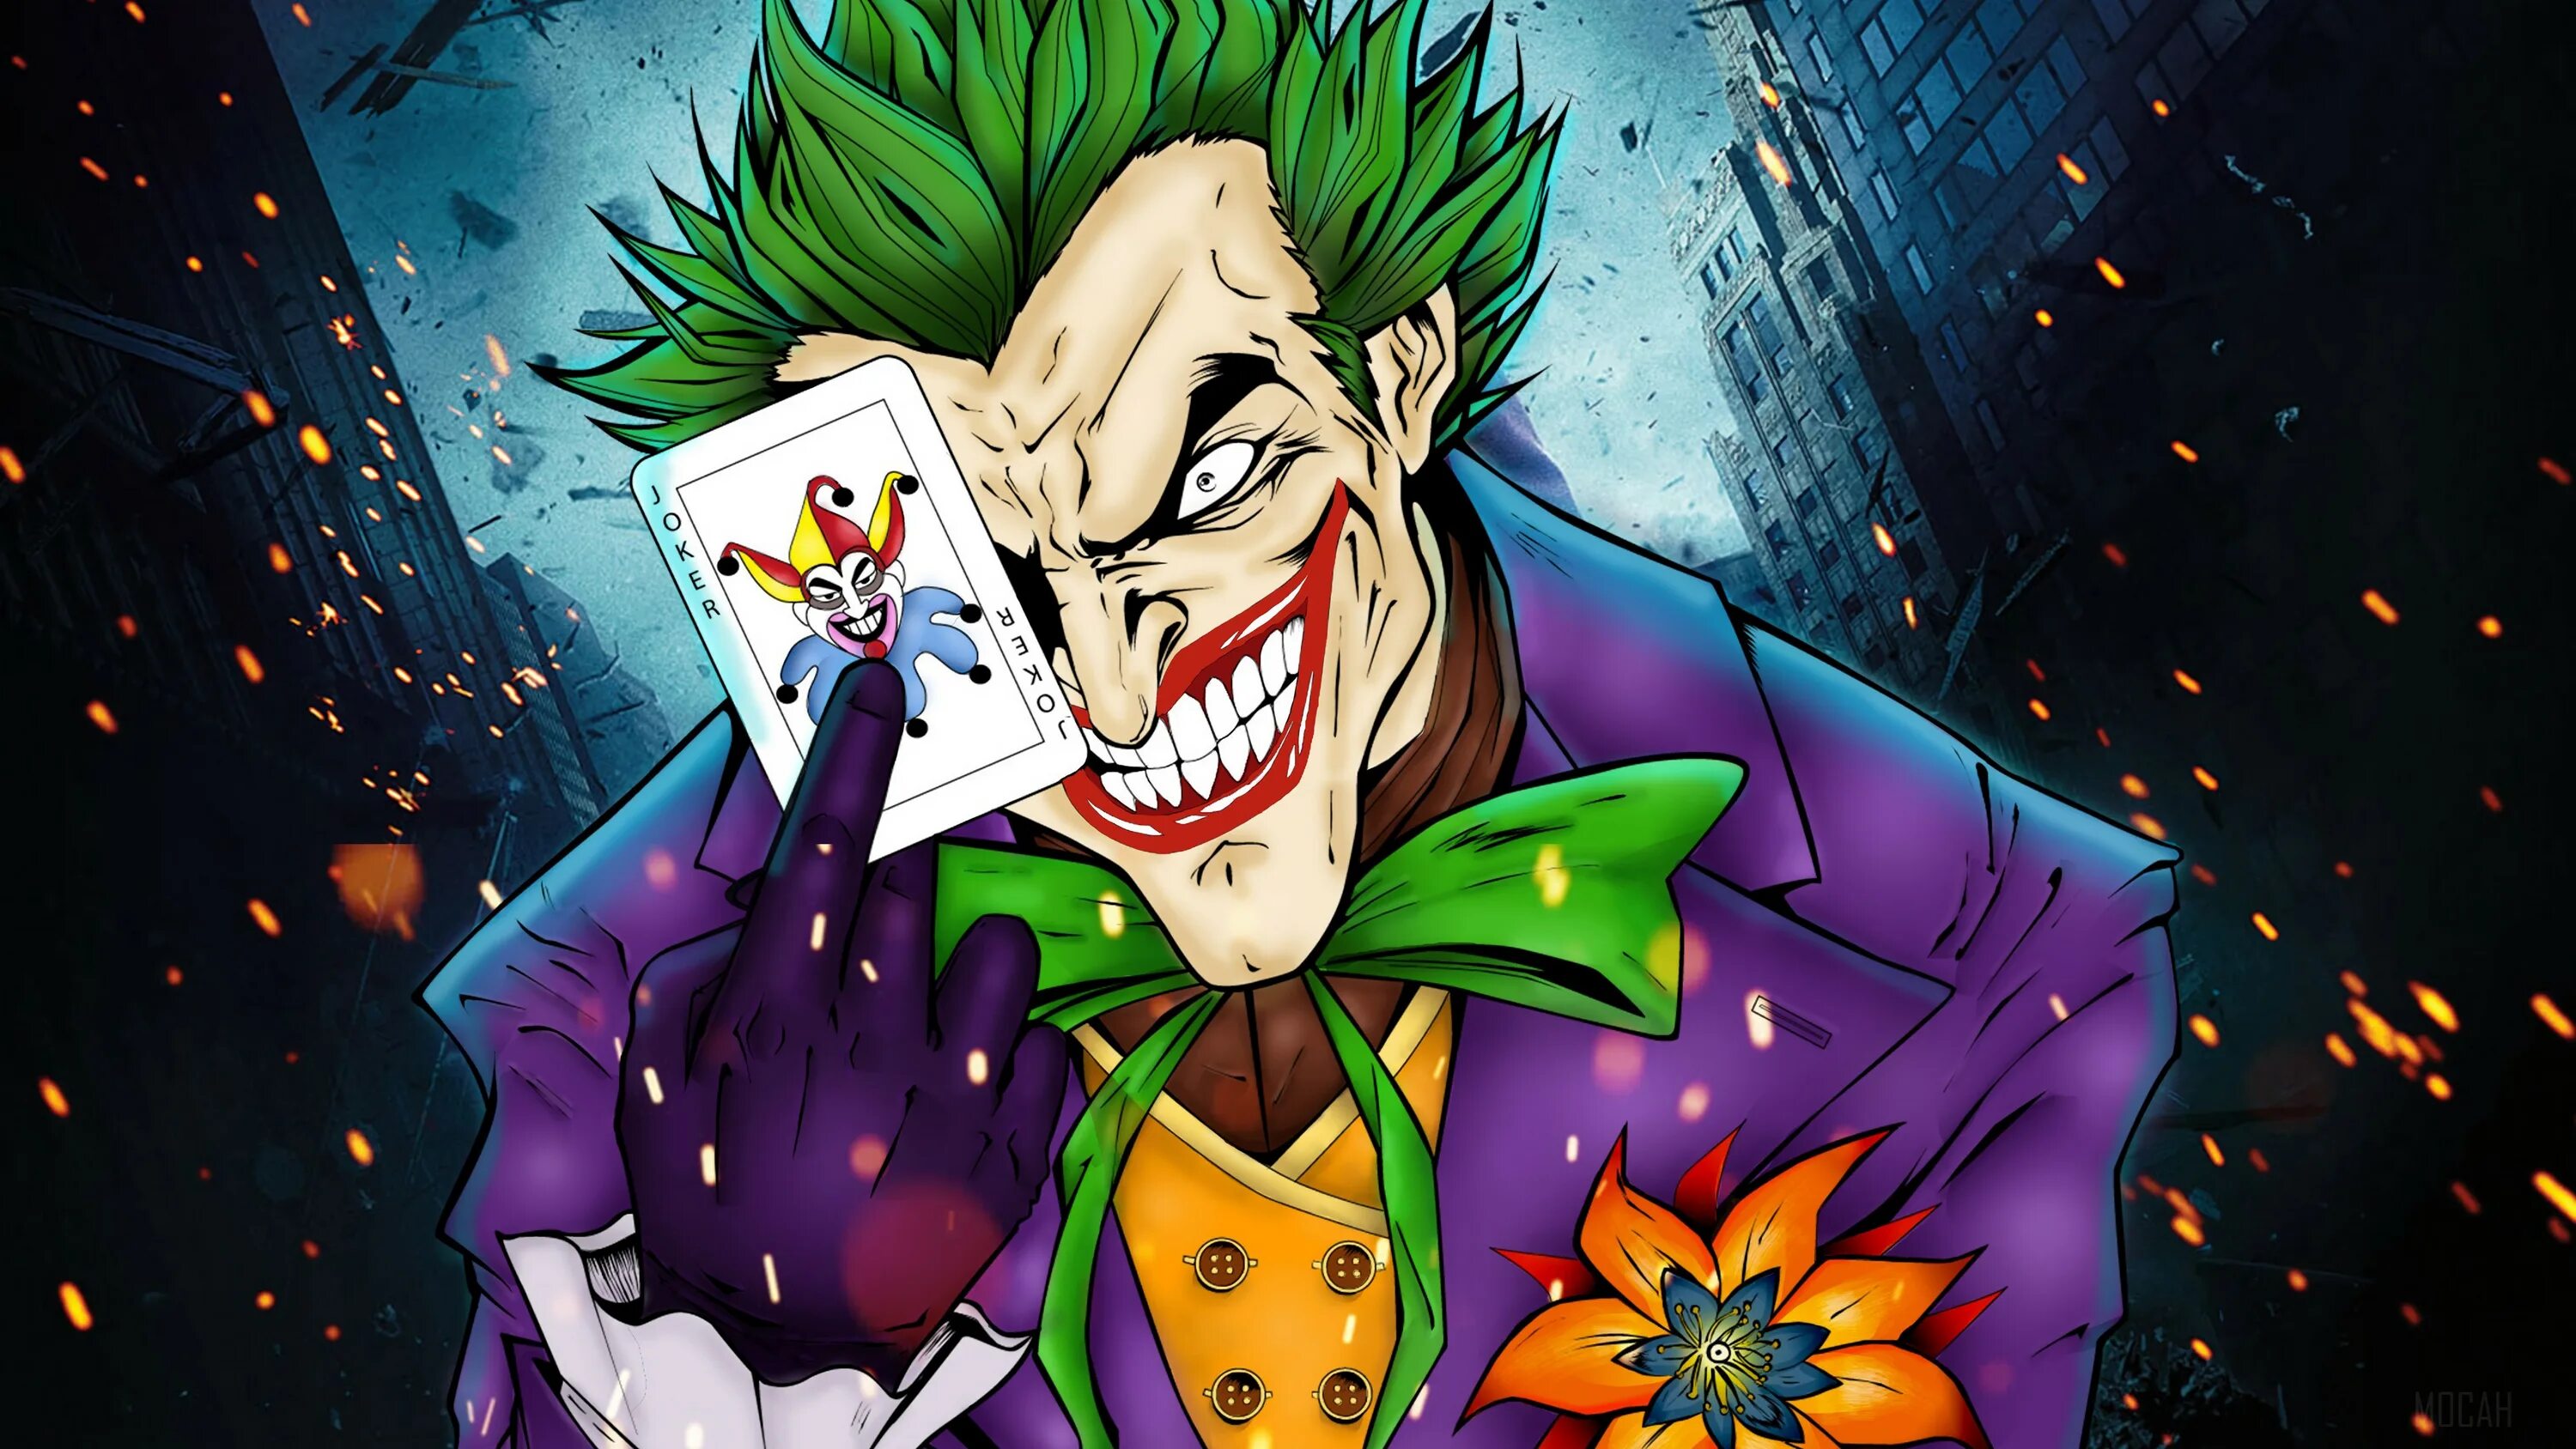 Joker joker demo. Джокер DC Comics хит Леджер.